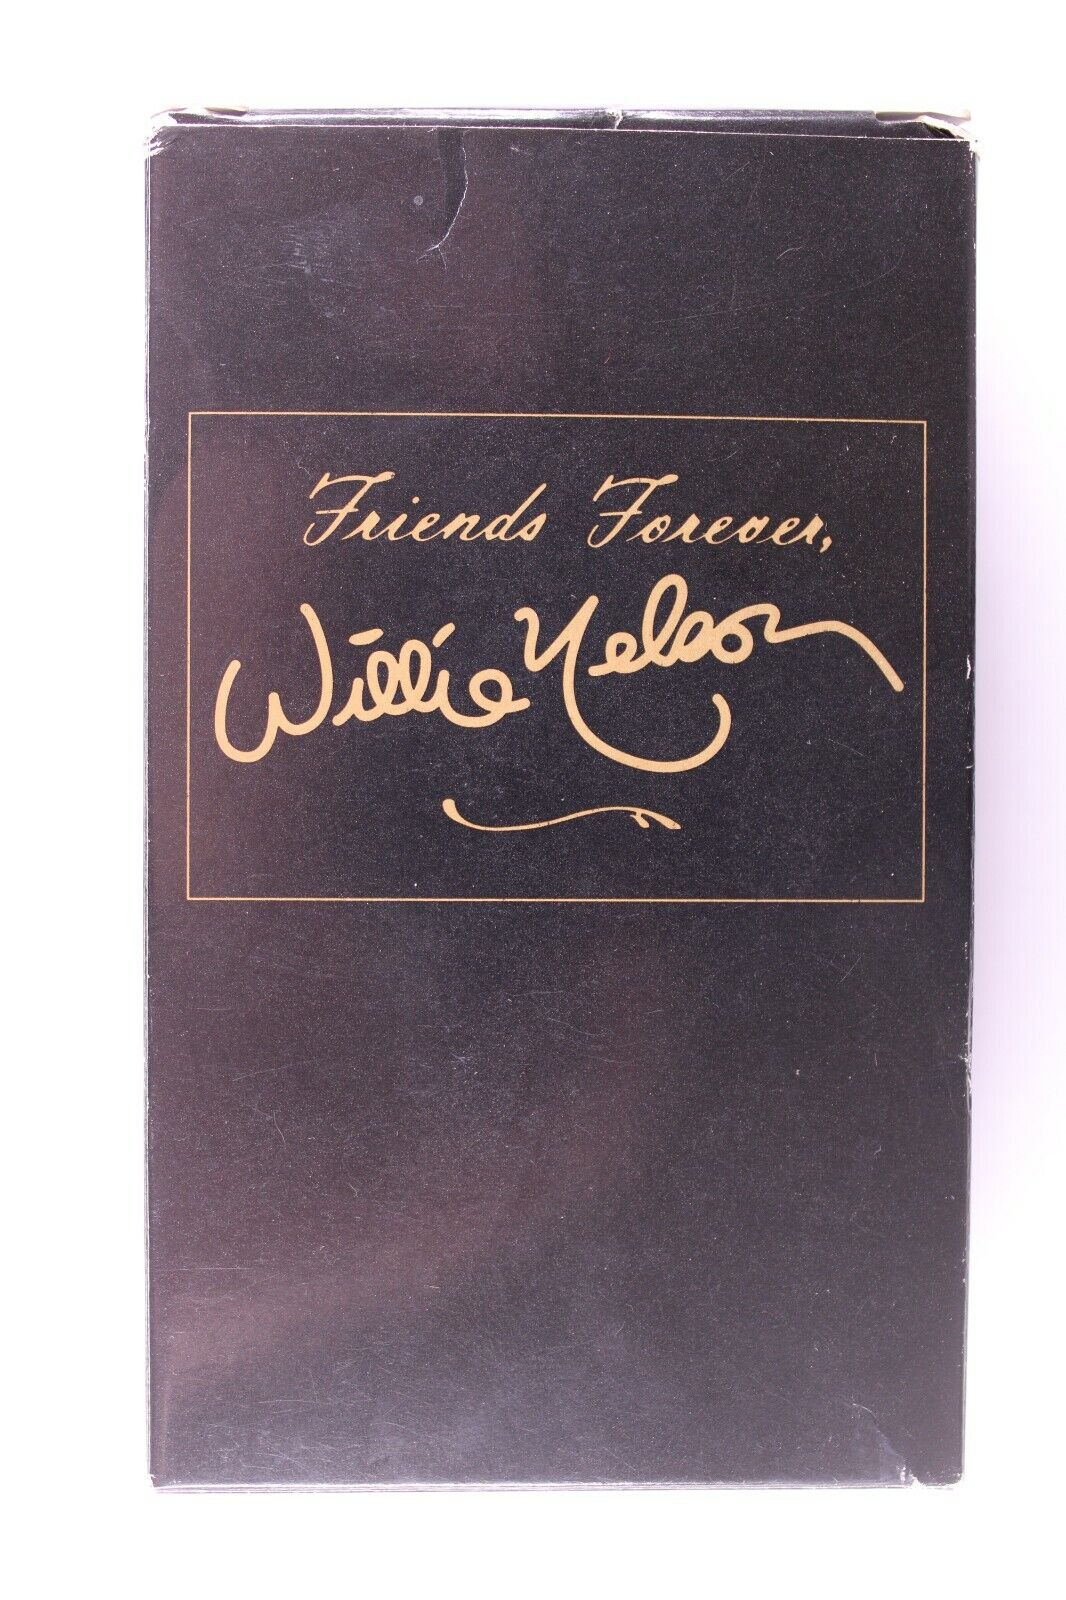 Willie Nelson Promo Notebooks x 7 Original In Box Friends Forever Circa 2000